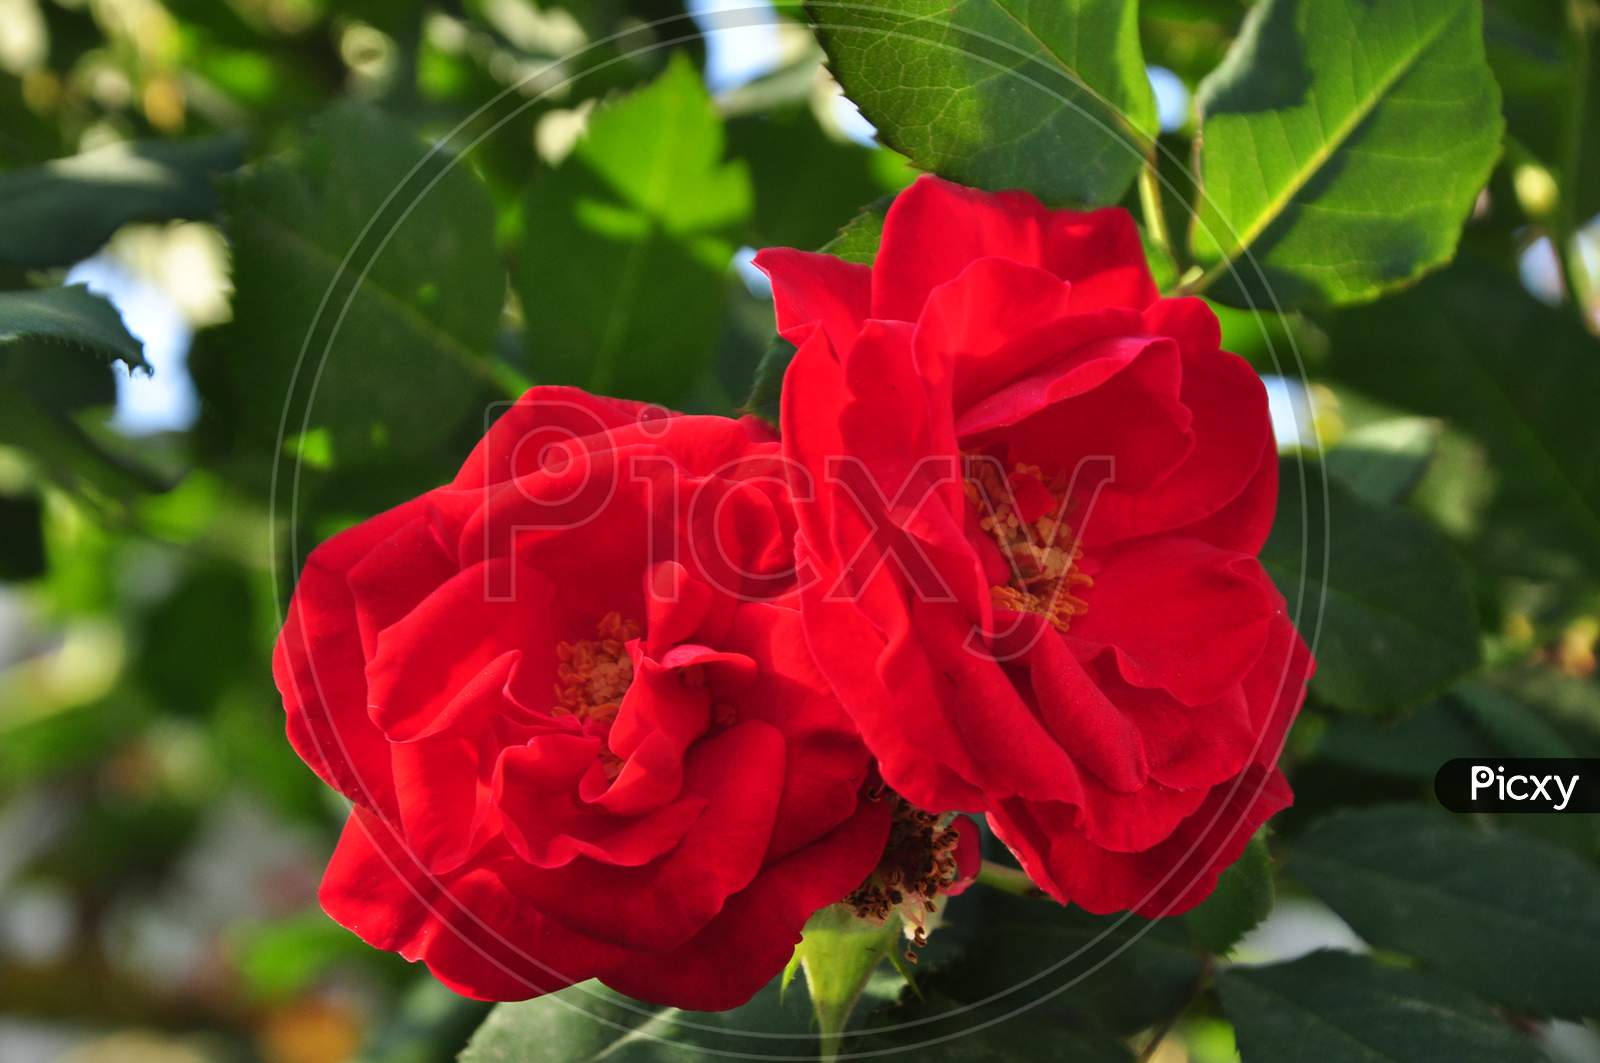 Beautiful red Rose in close-up